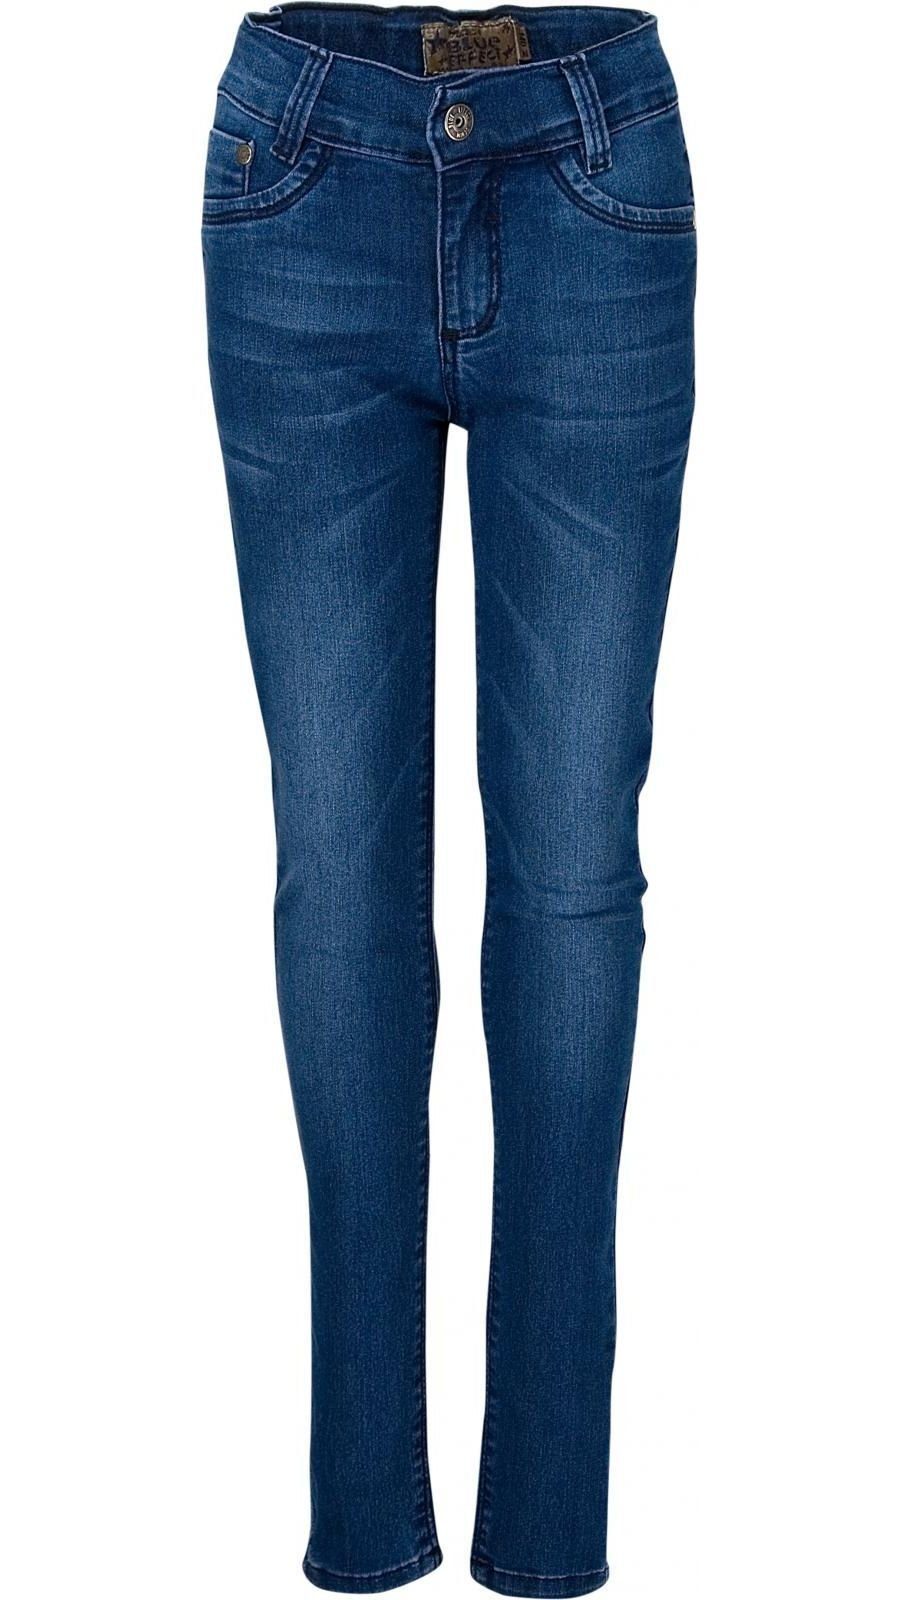 Plus-Größe weit BLUE Jeggings EFFECT Comfort-fit-Jeans Bundweite black blue